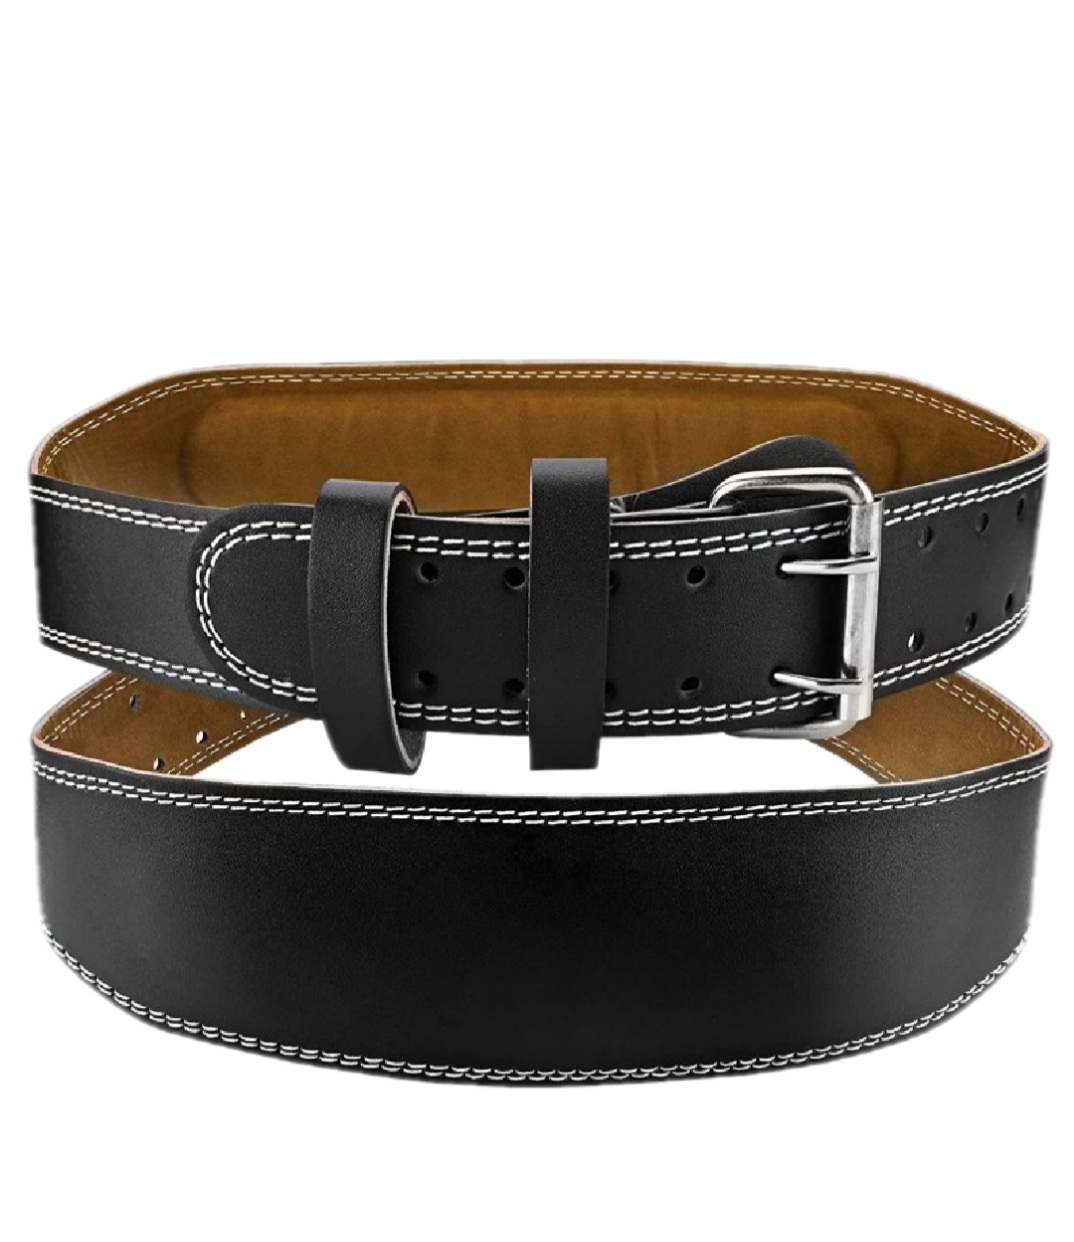 Cinturón Lumbar De Cuero Para Cintura De 85 A 110cm Ded - negro - 